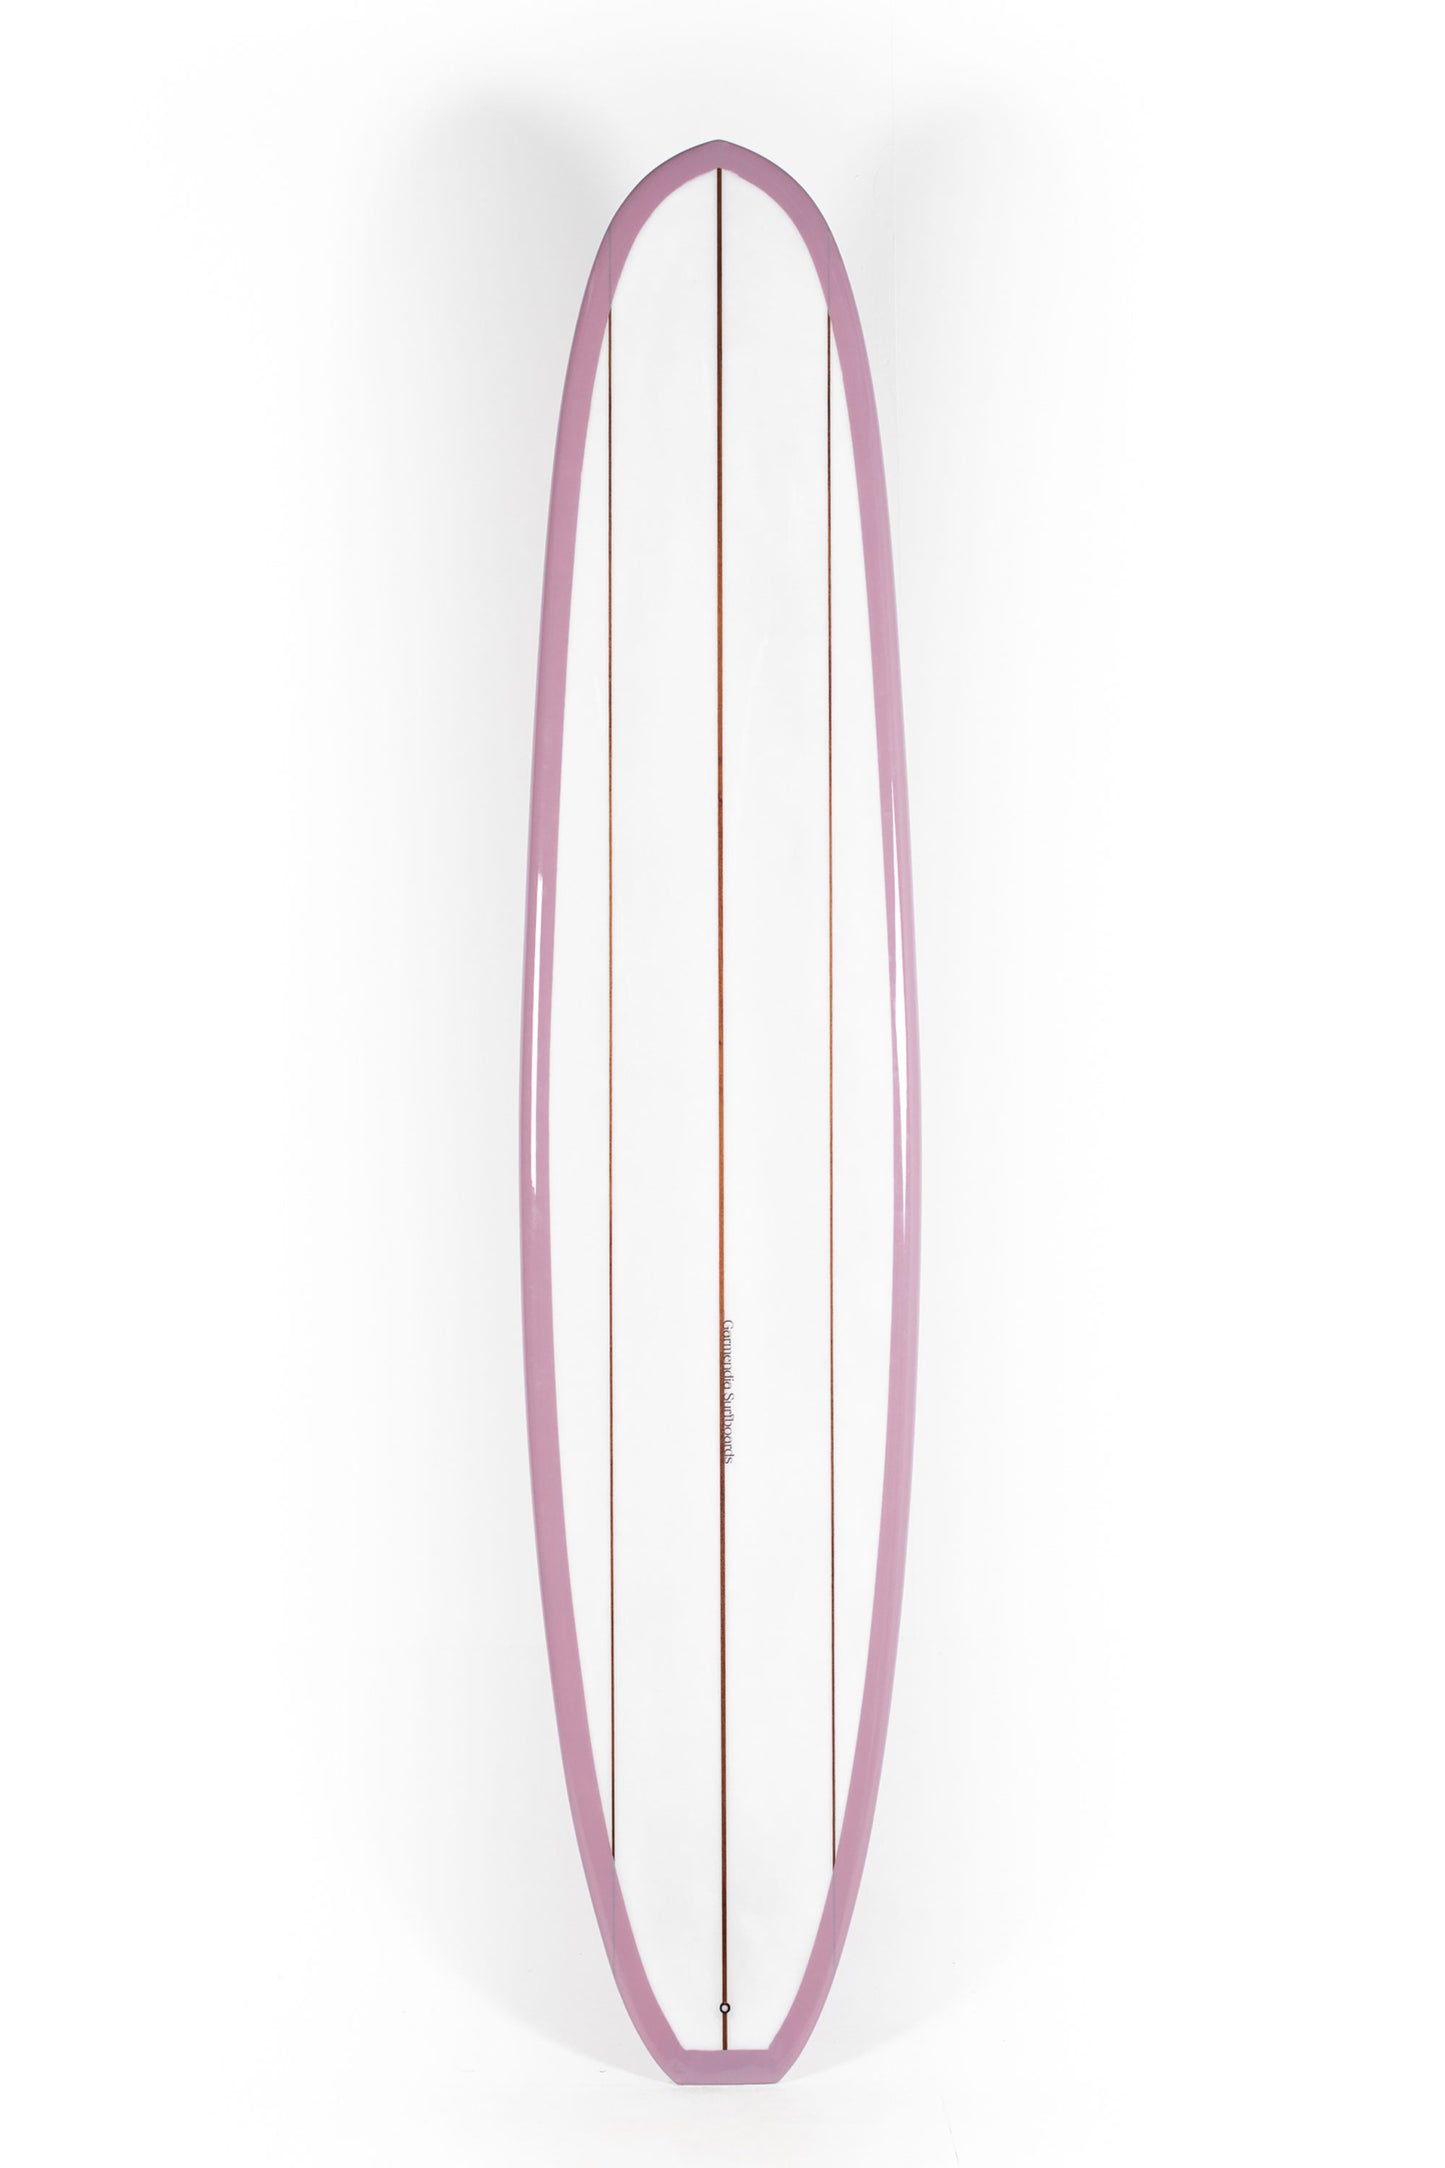 Pukas Surf Shop - Garmendia Surfboards - BULLET - 9'2" x 22 7/8 x 2 7/8 - Ref. BULLET92S22